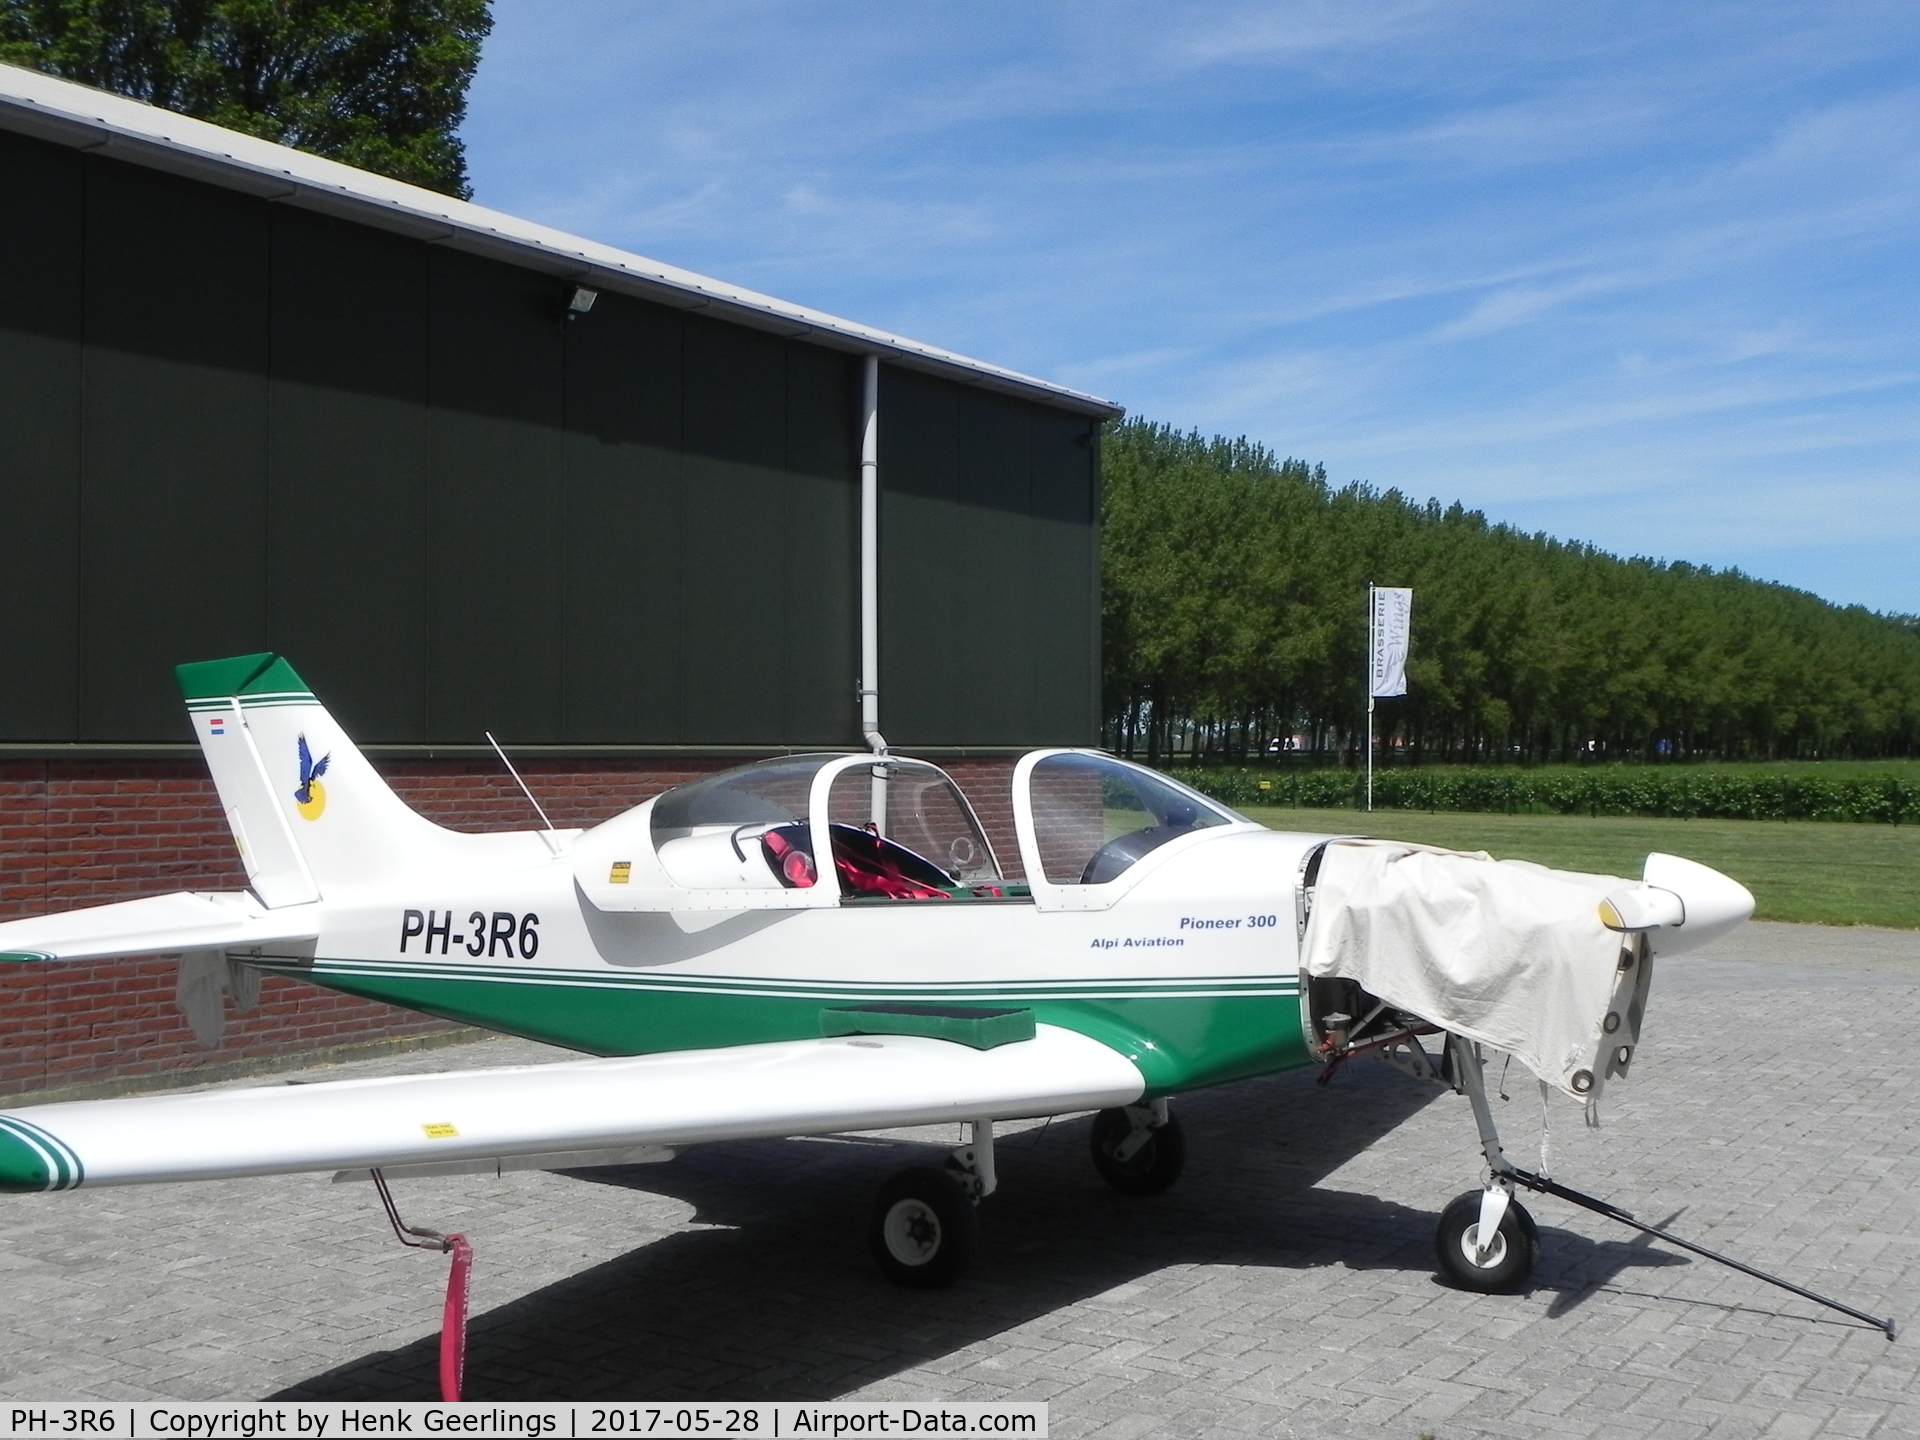 PH-3R6, 2002 Alpi Aviation Pioneer 300N C/N 0072, Ultra light , Middenmeer